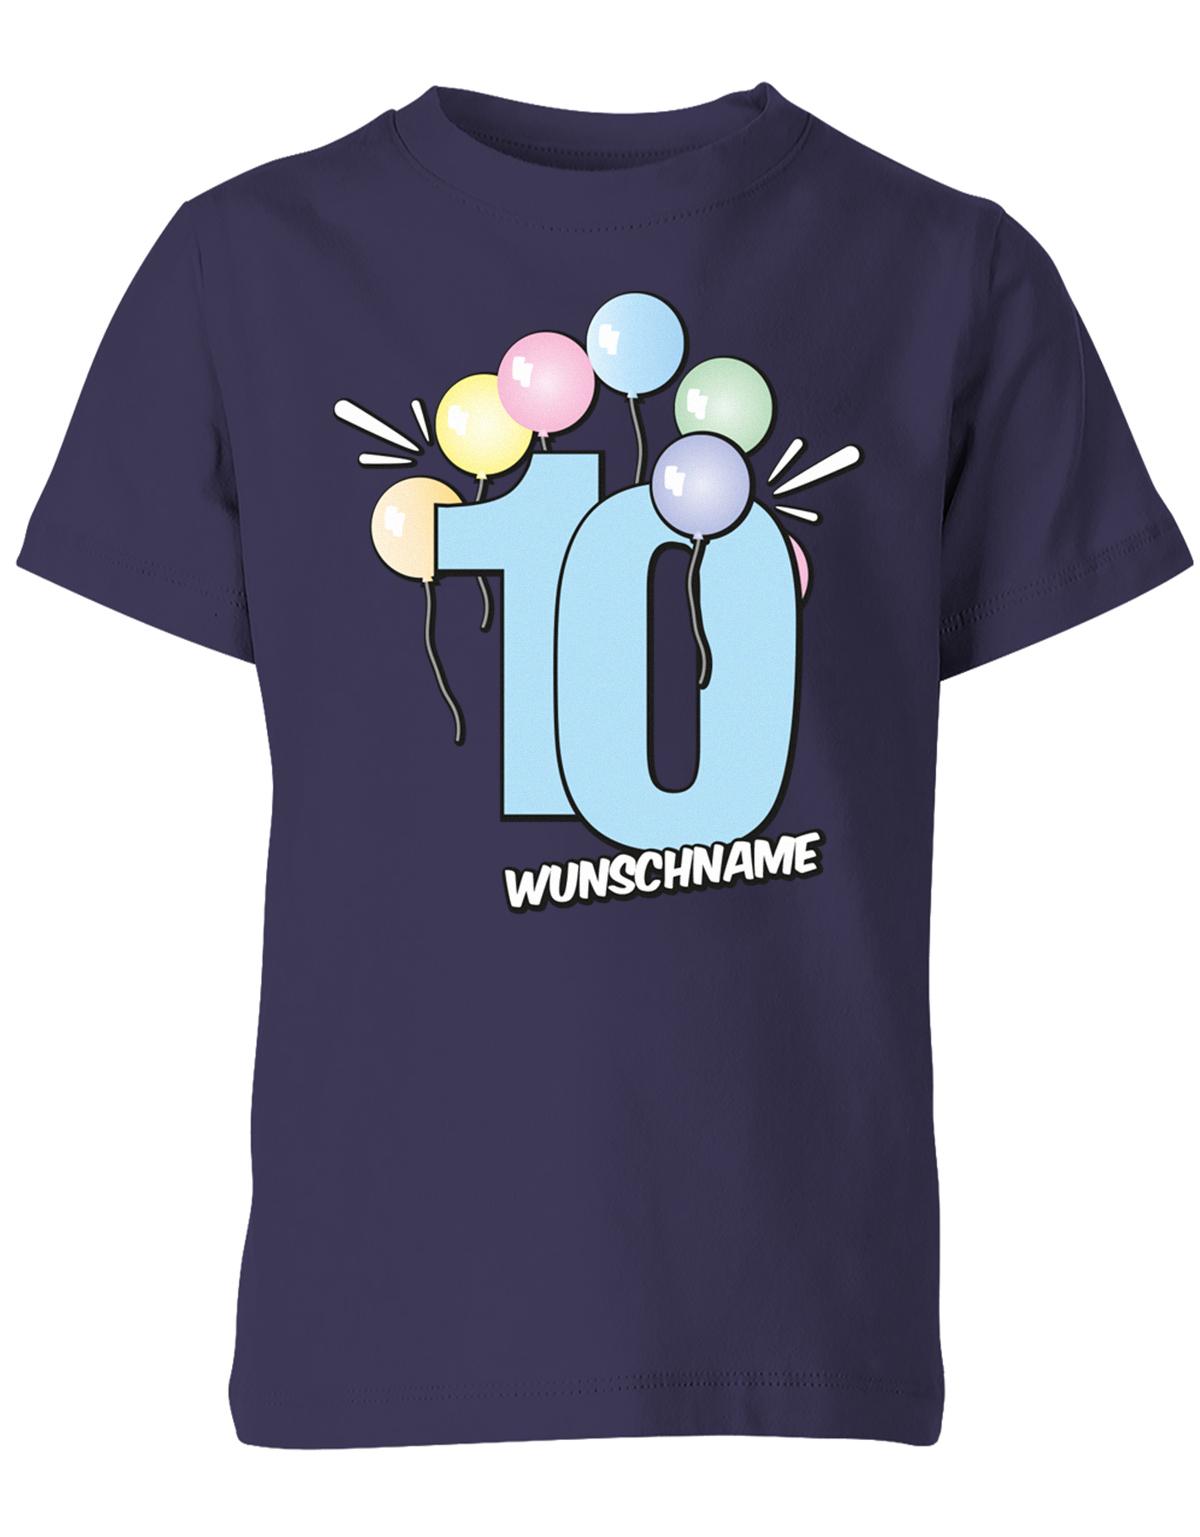 Luftballons-pastell-10-geburtstag-wunschname-kinder-shirt-navy